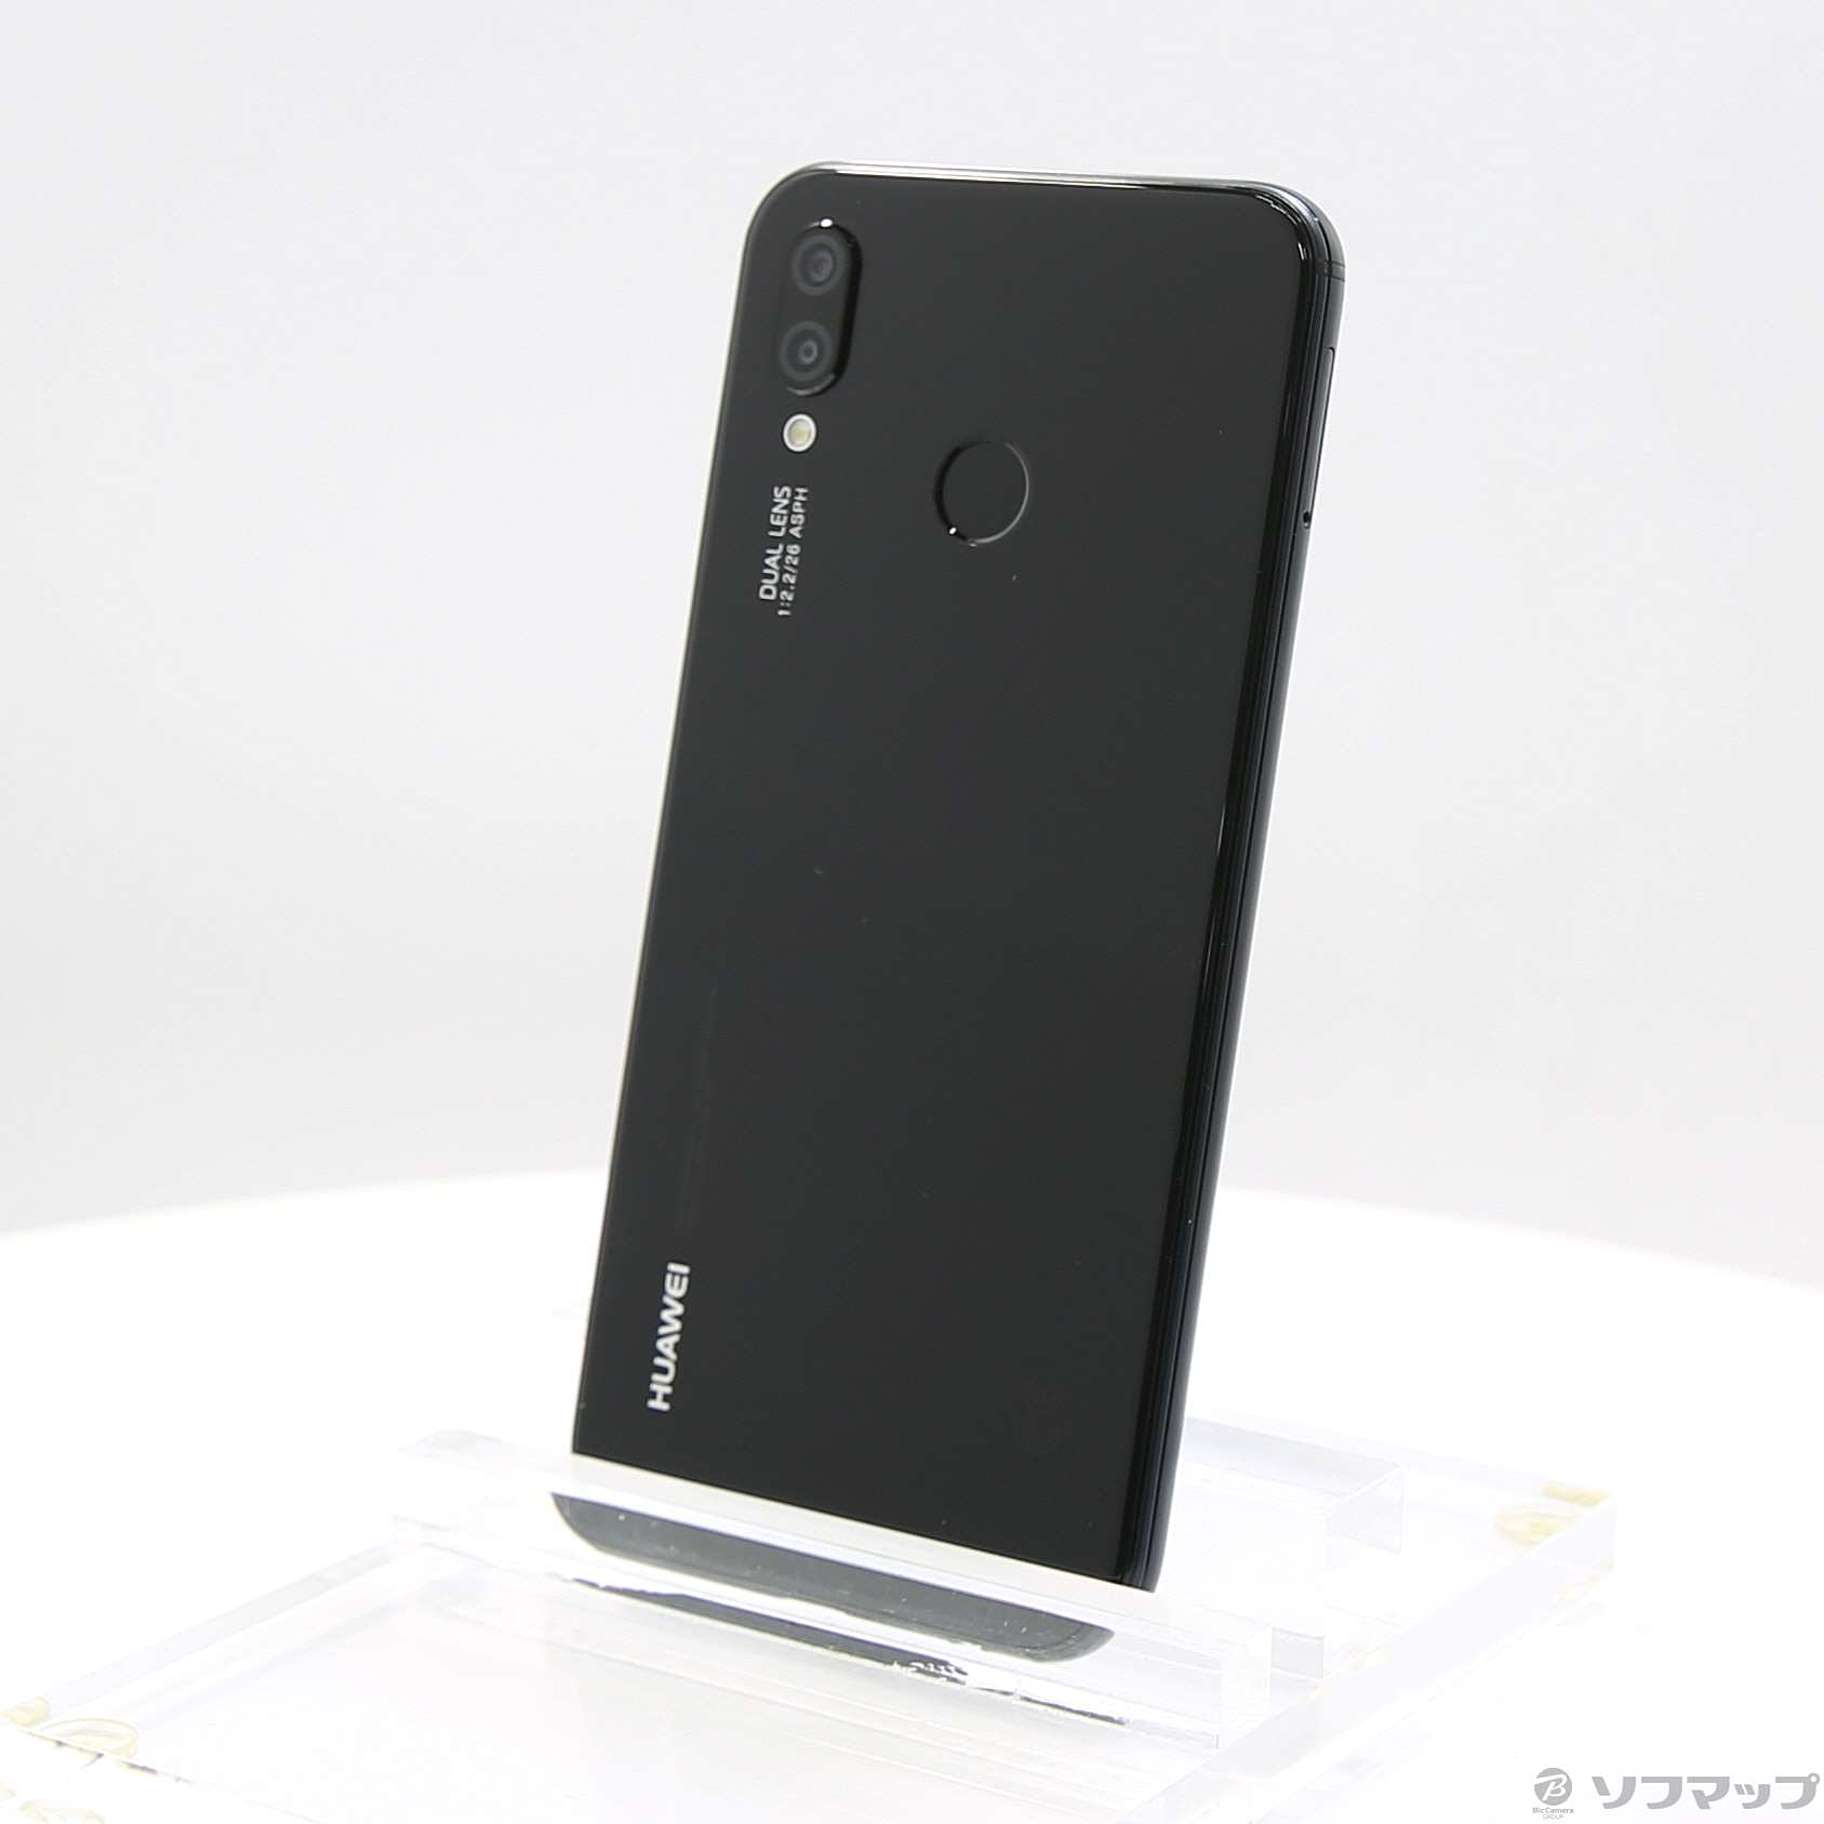 Huawei P20lite ブラック 32GB Y!mobile ケース付き